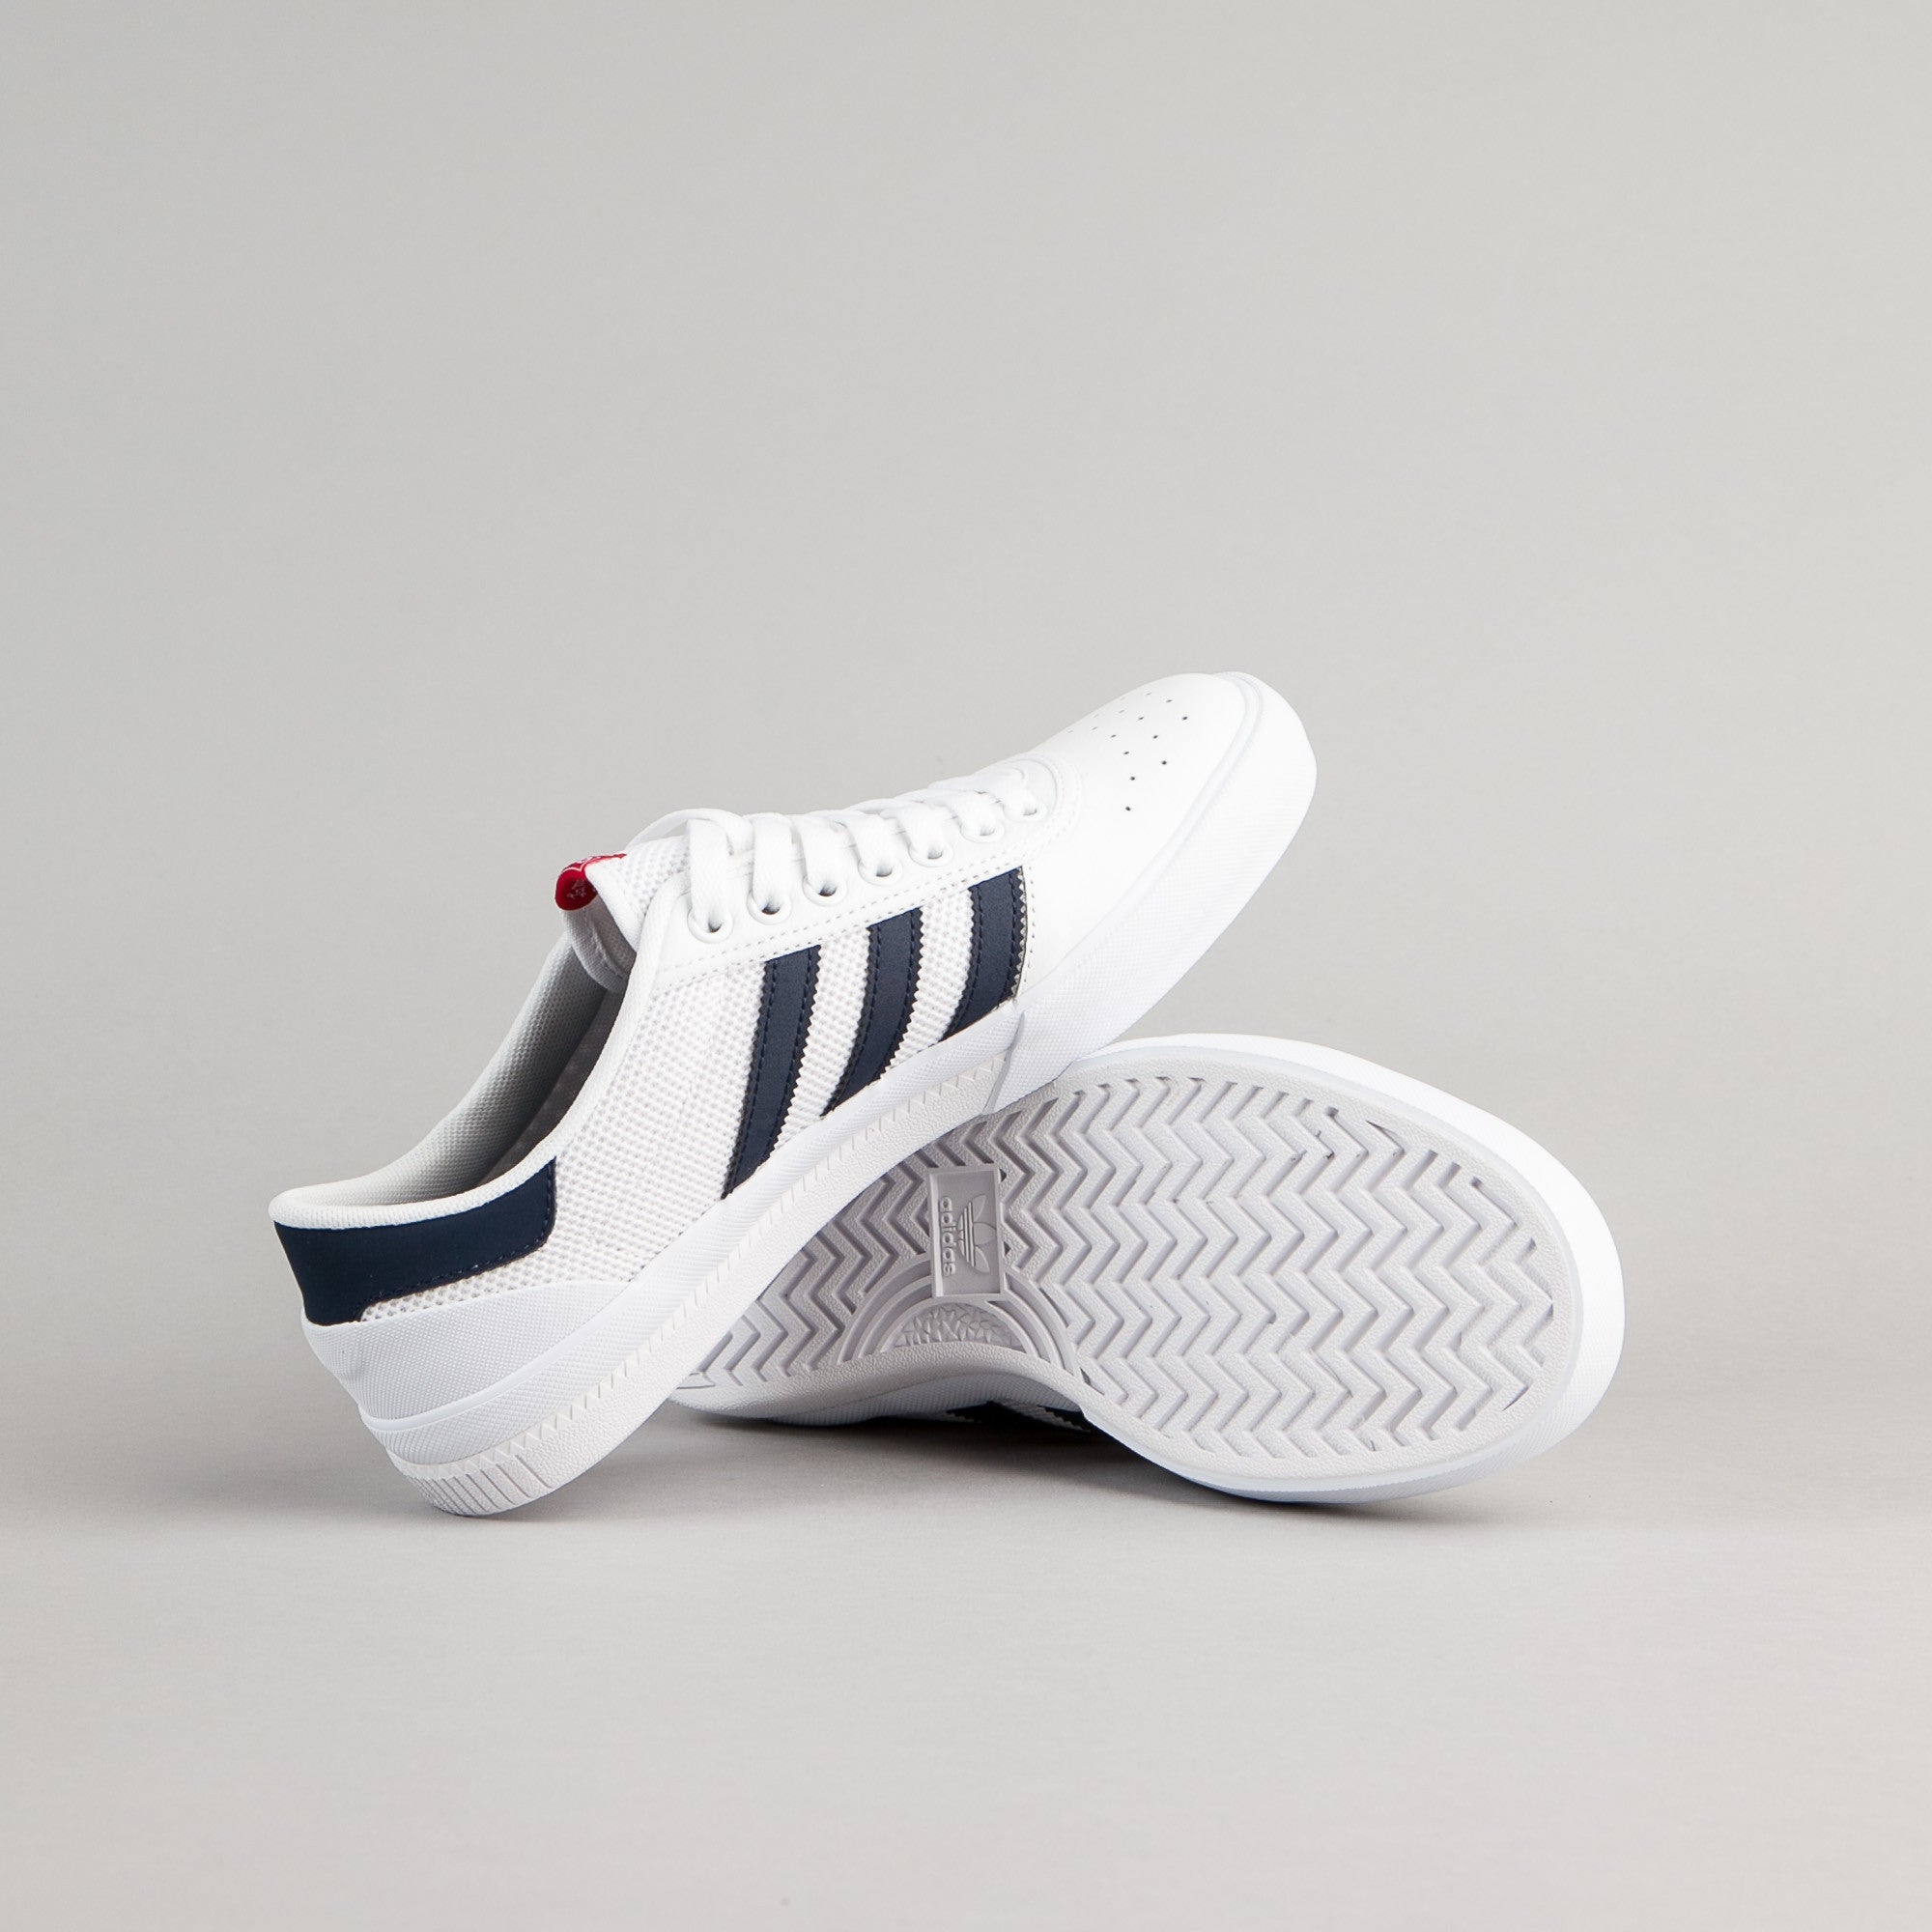 Adidas Lucas Premiere ADV Shoes - White / Collegiate Navy / Scarlet ...